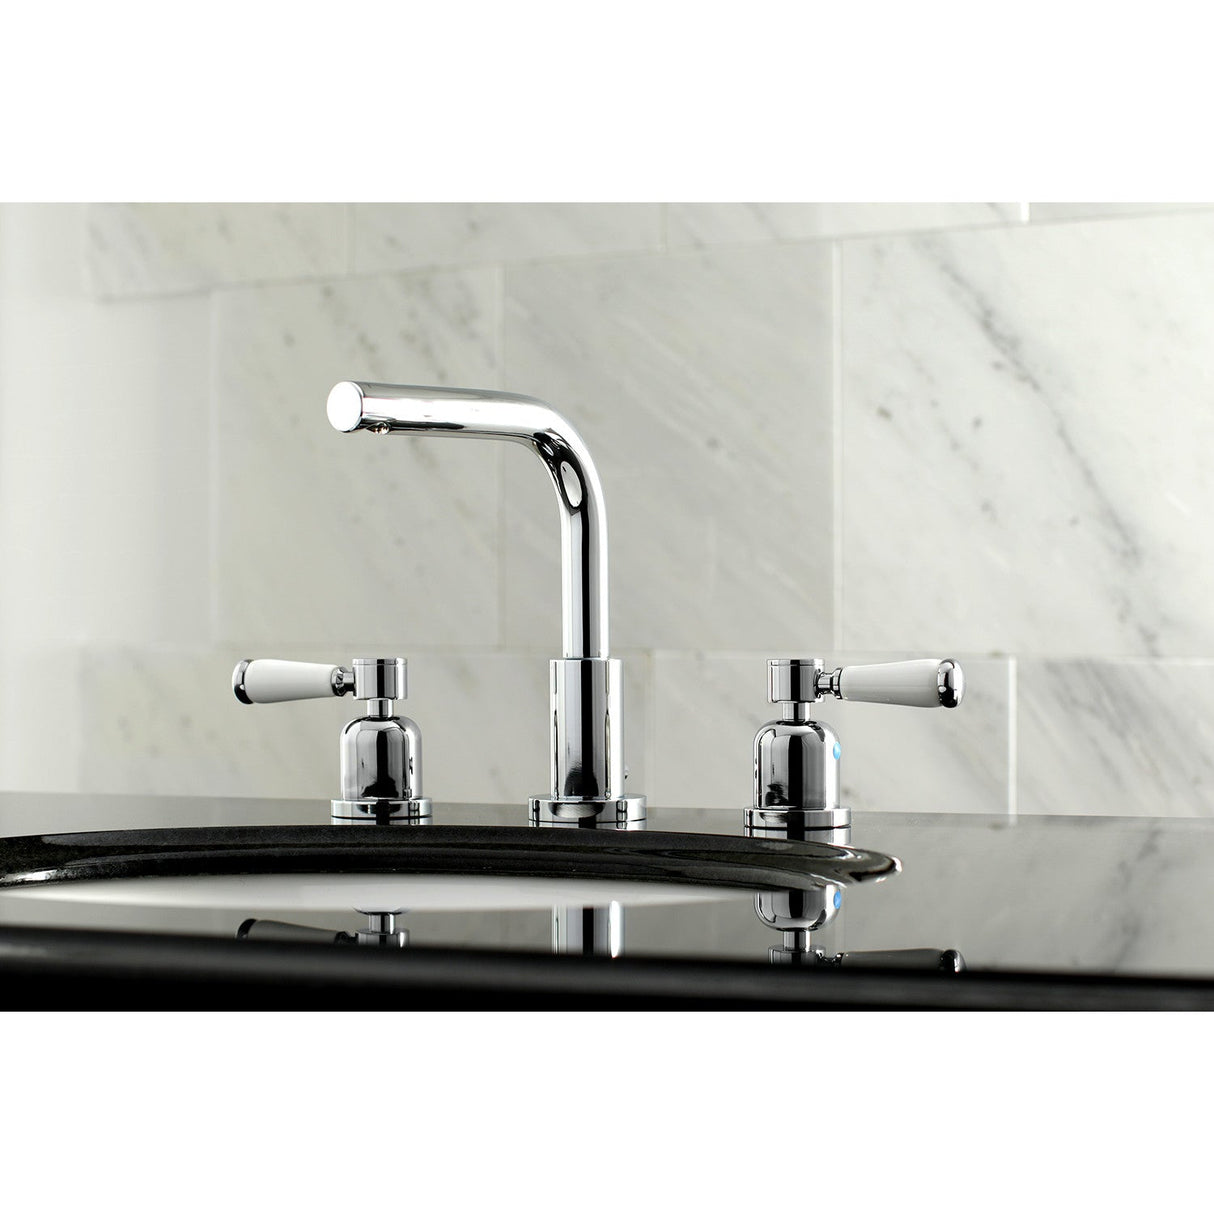 Paris FSC8951DPL Two-Handle 3-Hole Deck Mount Widespread Bathroom Faucet with Pop-Up Drain, Polished Chrome